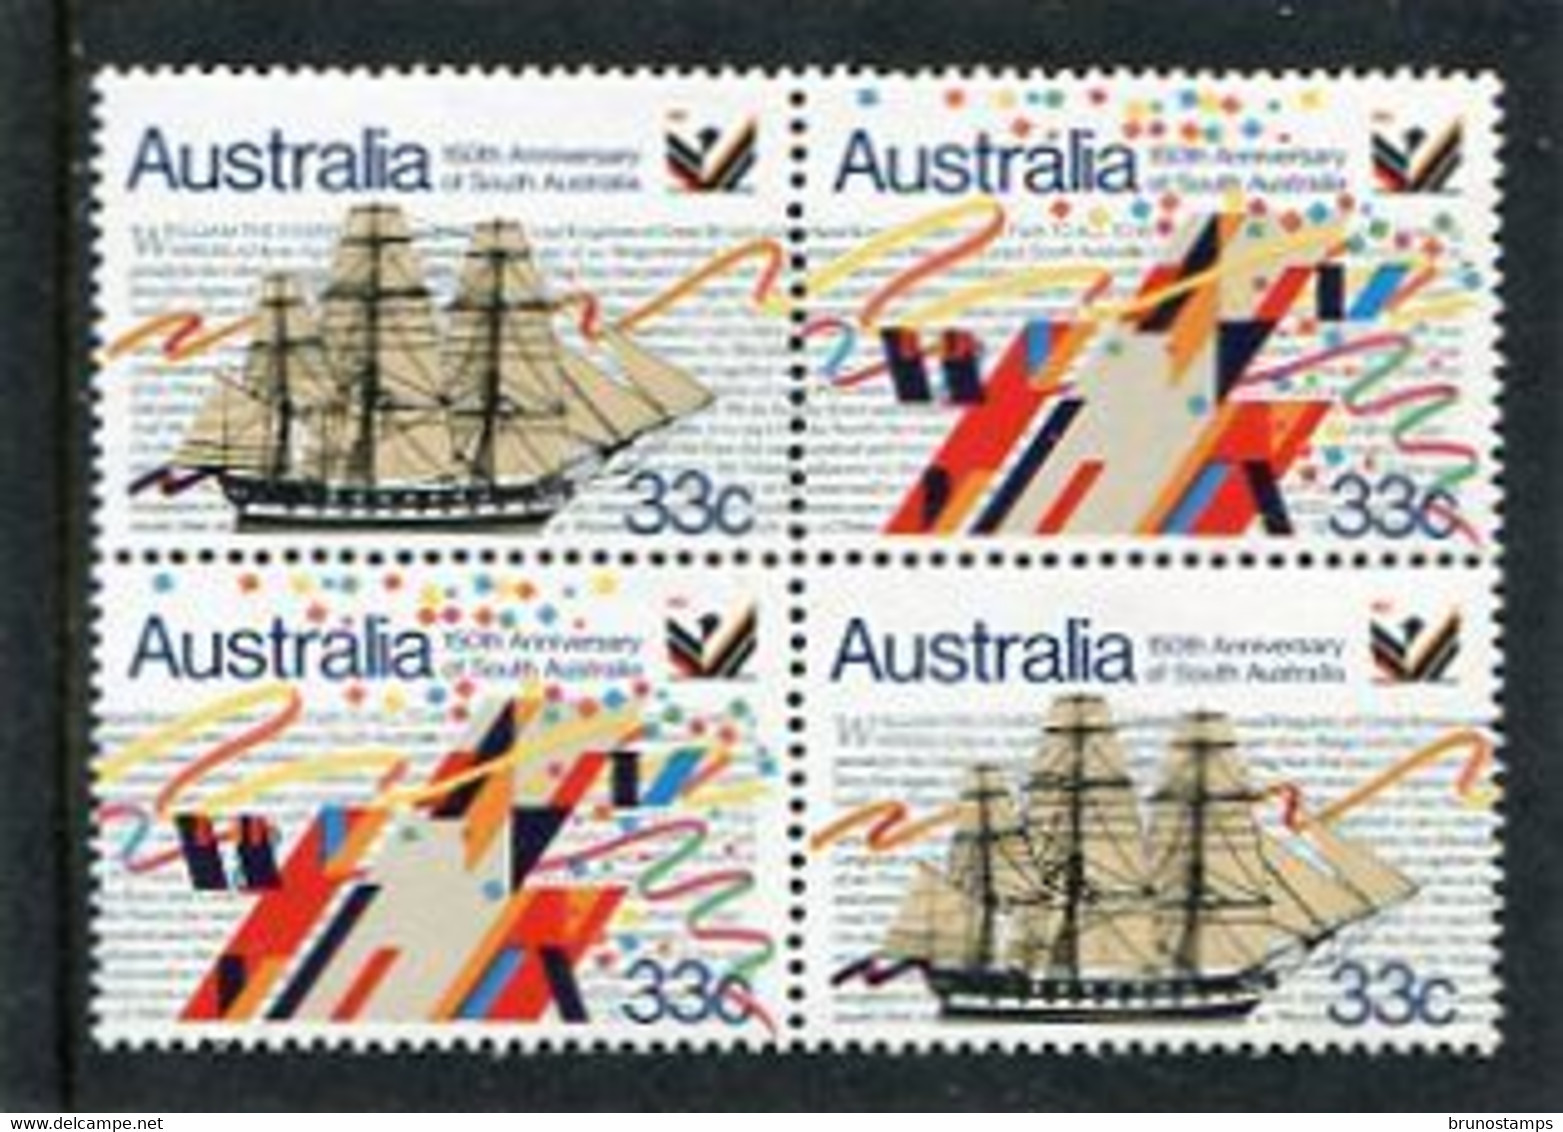 AUSTRALIA - 1986  SOUTH AUSTRALIA  BLOCK OF 4  MINT NH - Ungebraucht